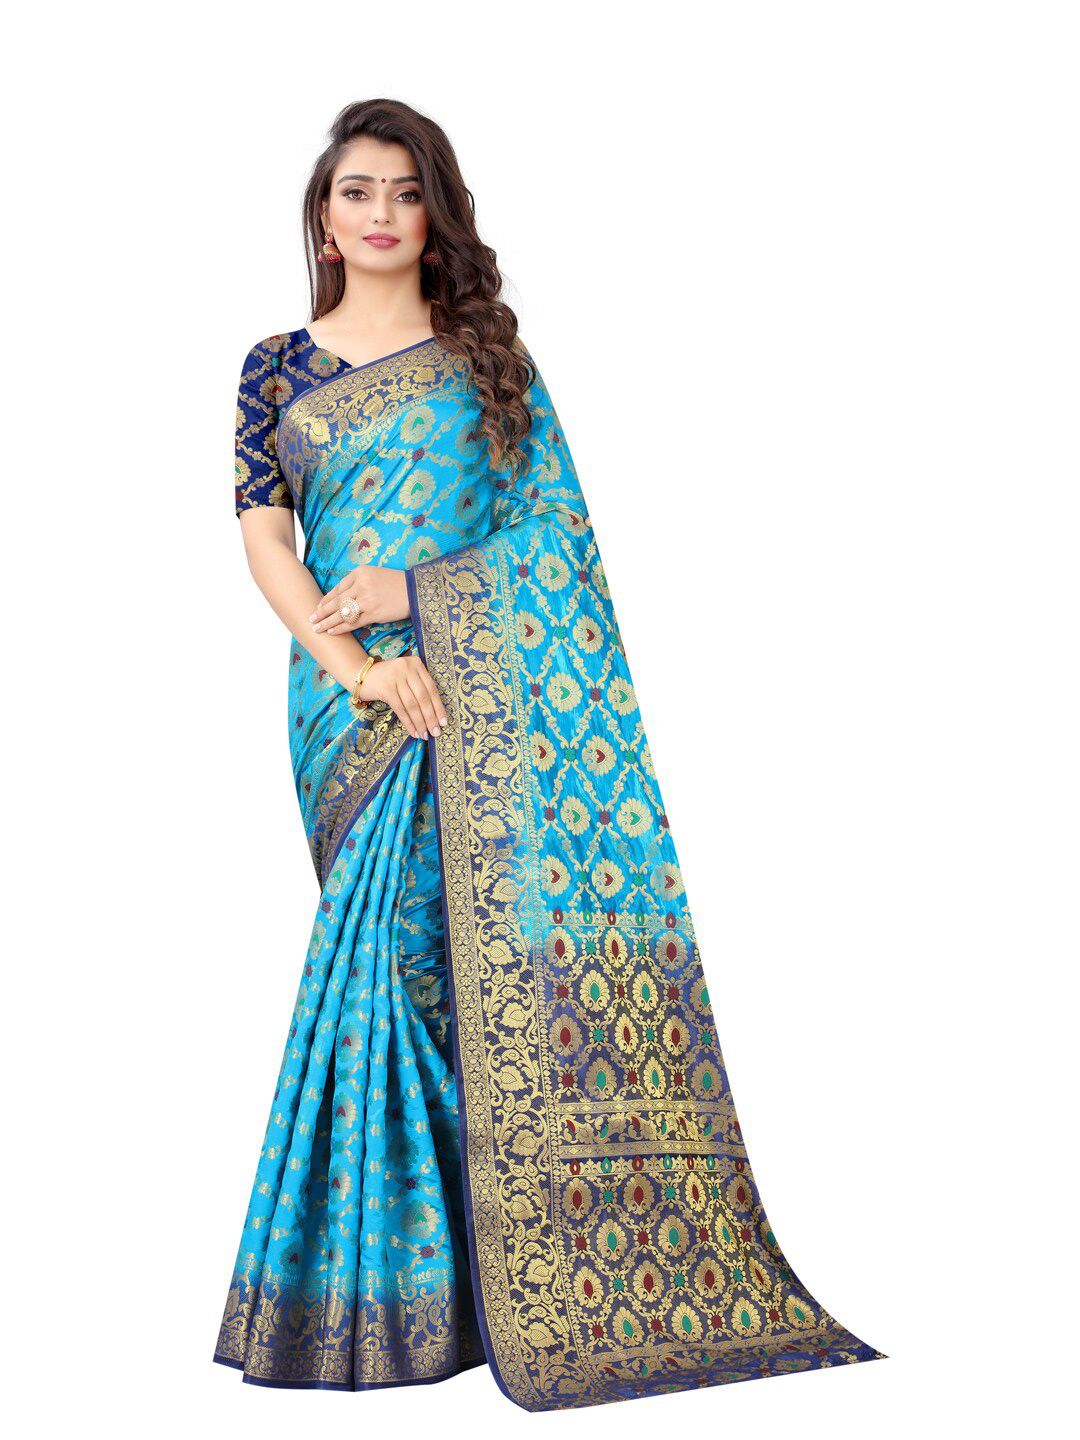 PERFECT WEAR Blue & Gold-Toned Woven Design Zari Silk Cotton Banarasi Saree Price in India